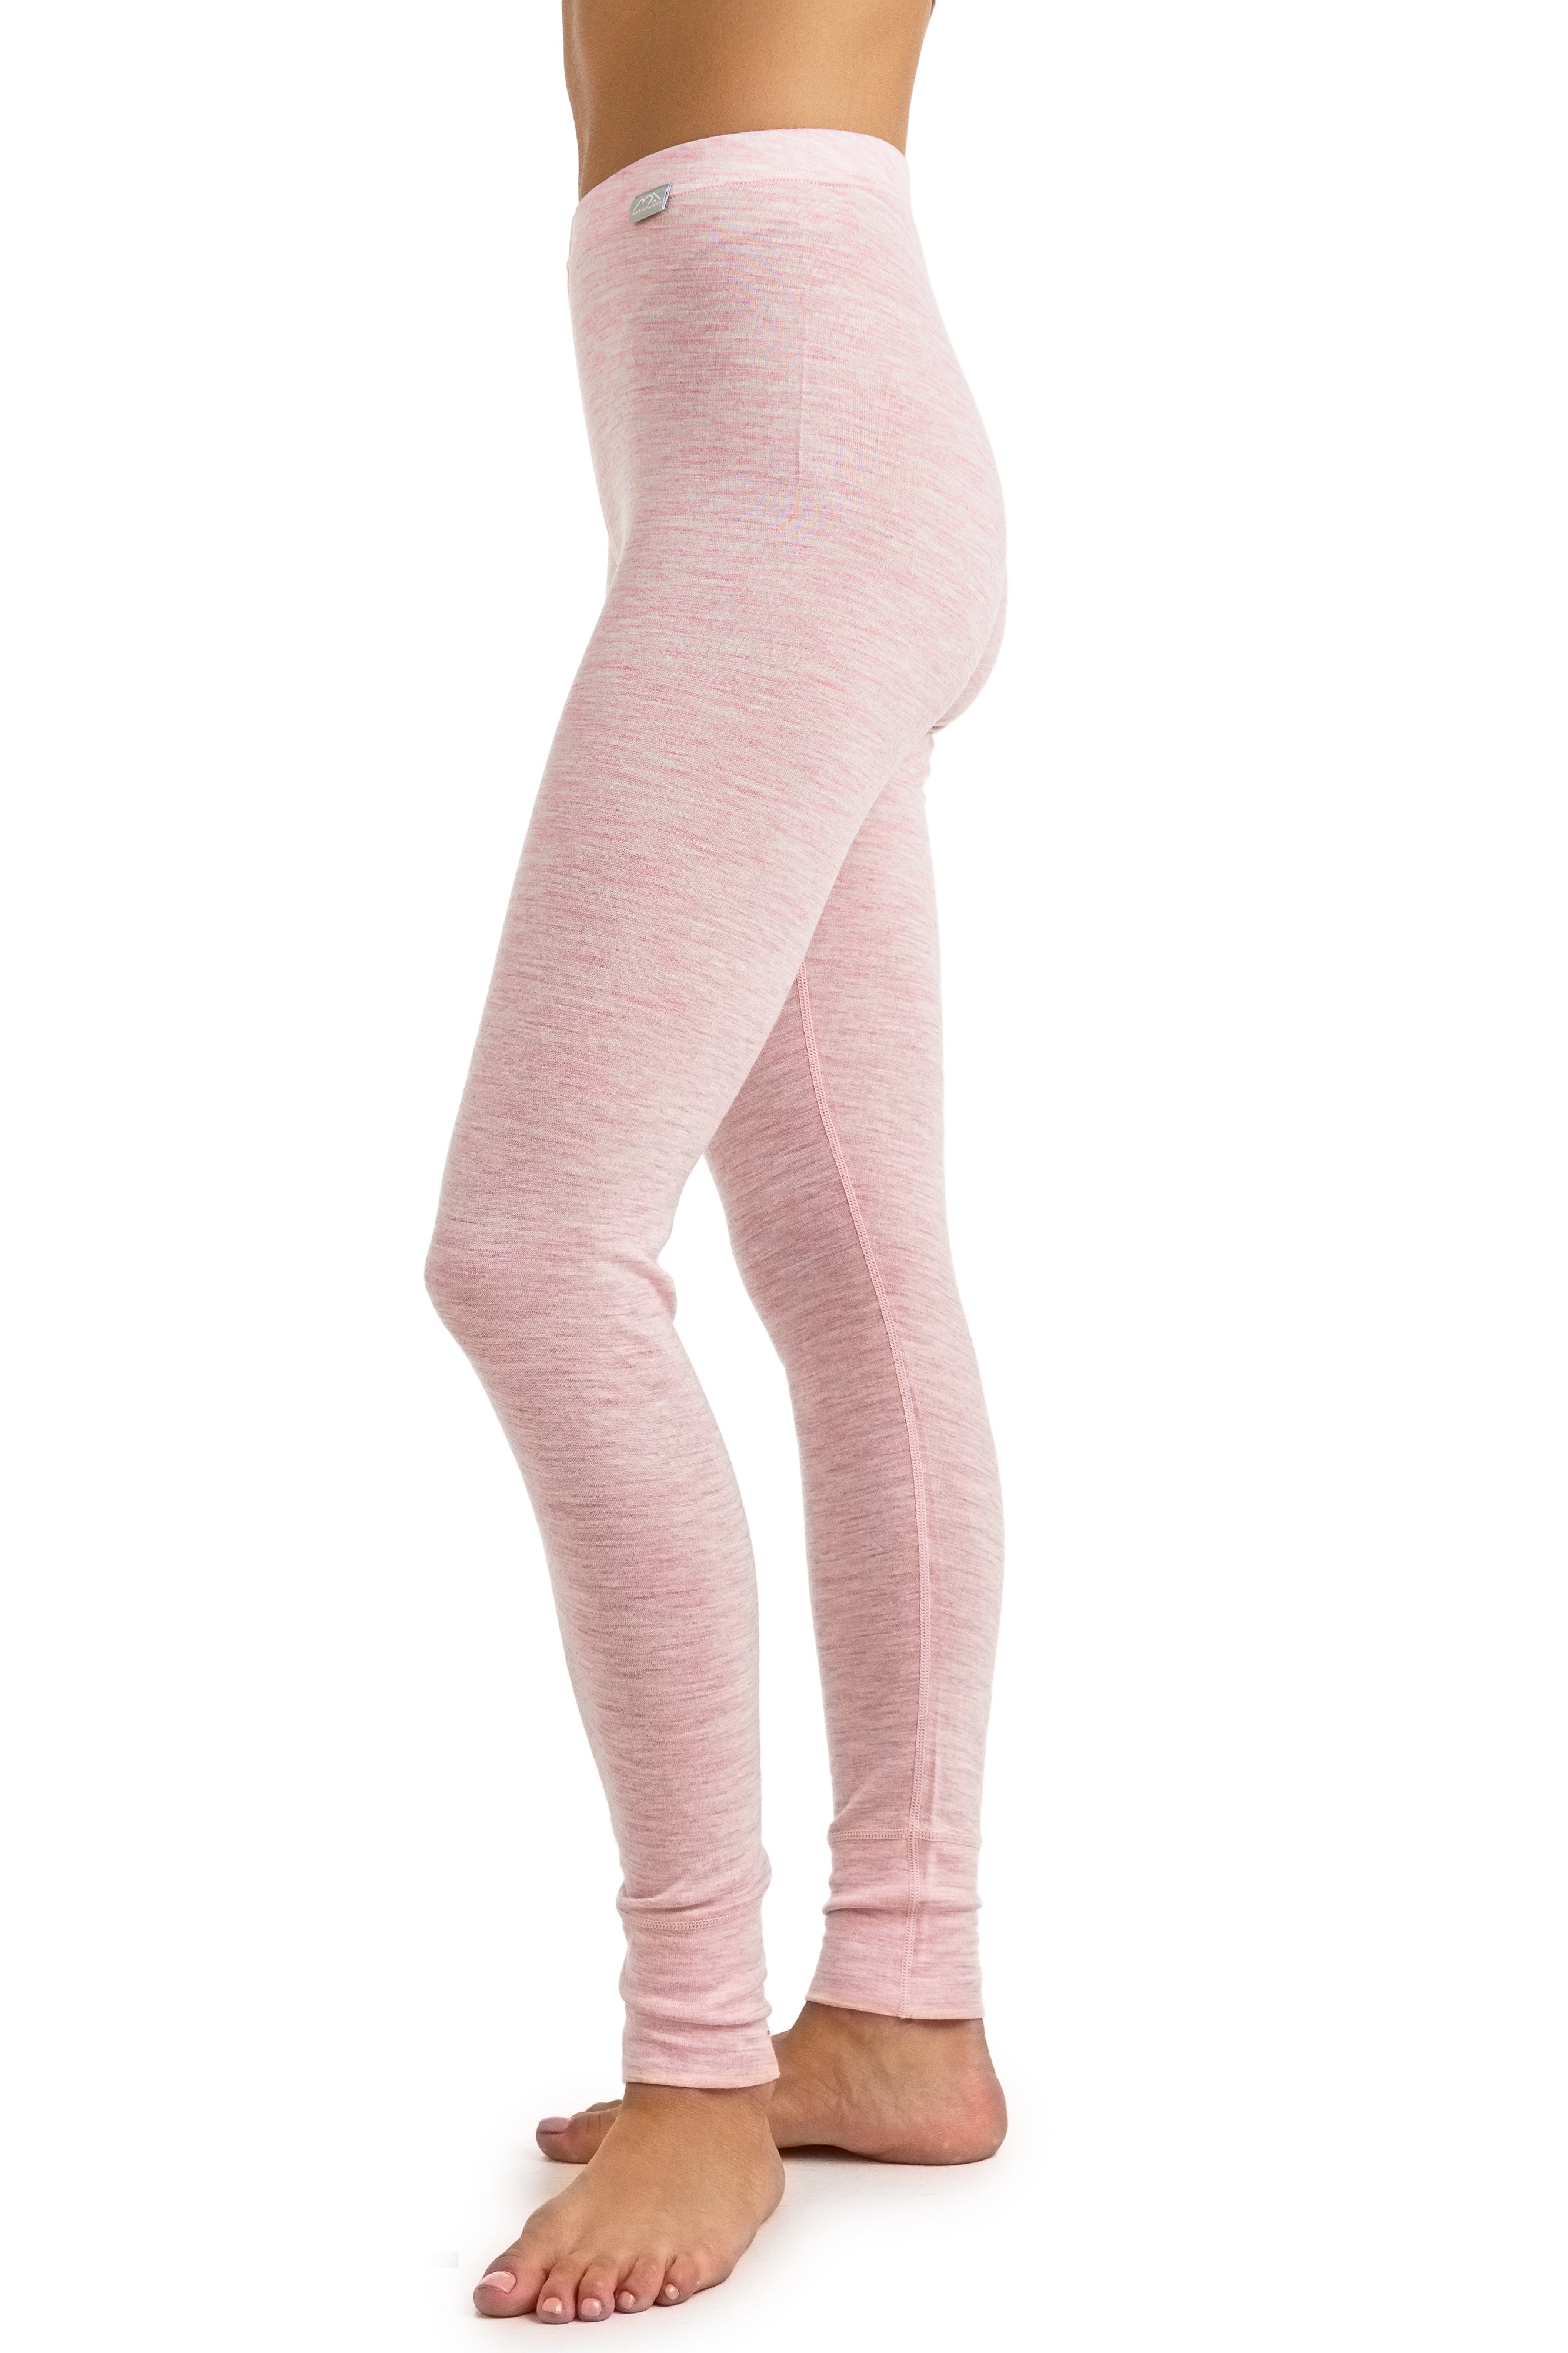 Women's Merino Wool Pants - Base Layer Pink Heather, Bottom, Underwear, Thermal  Leggings, Lightweight